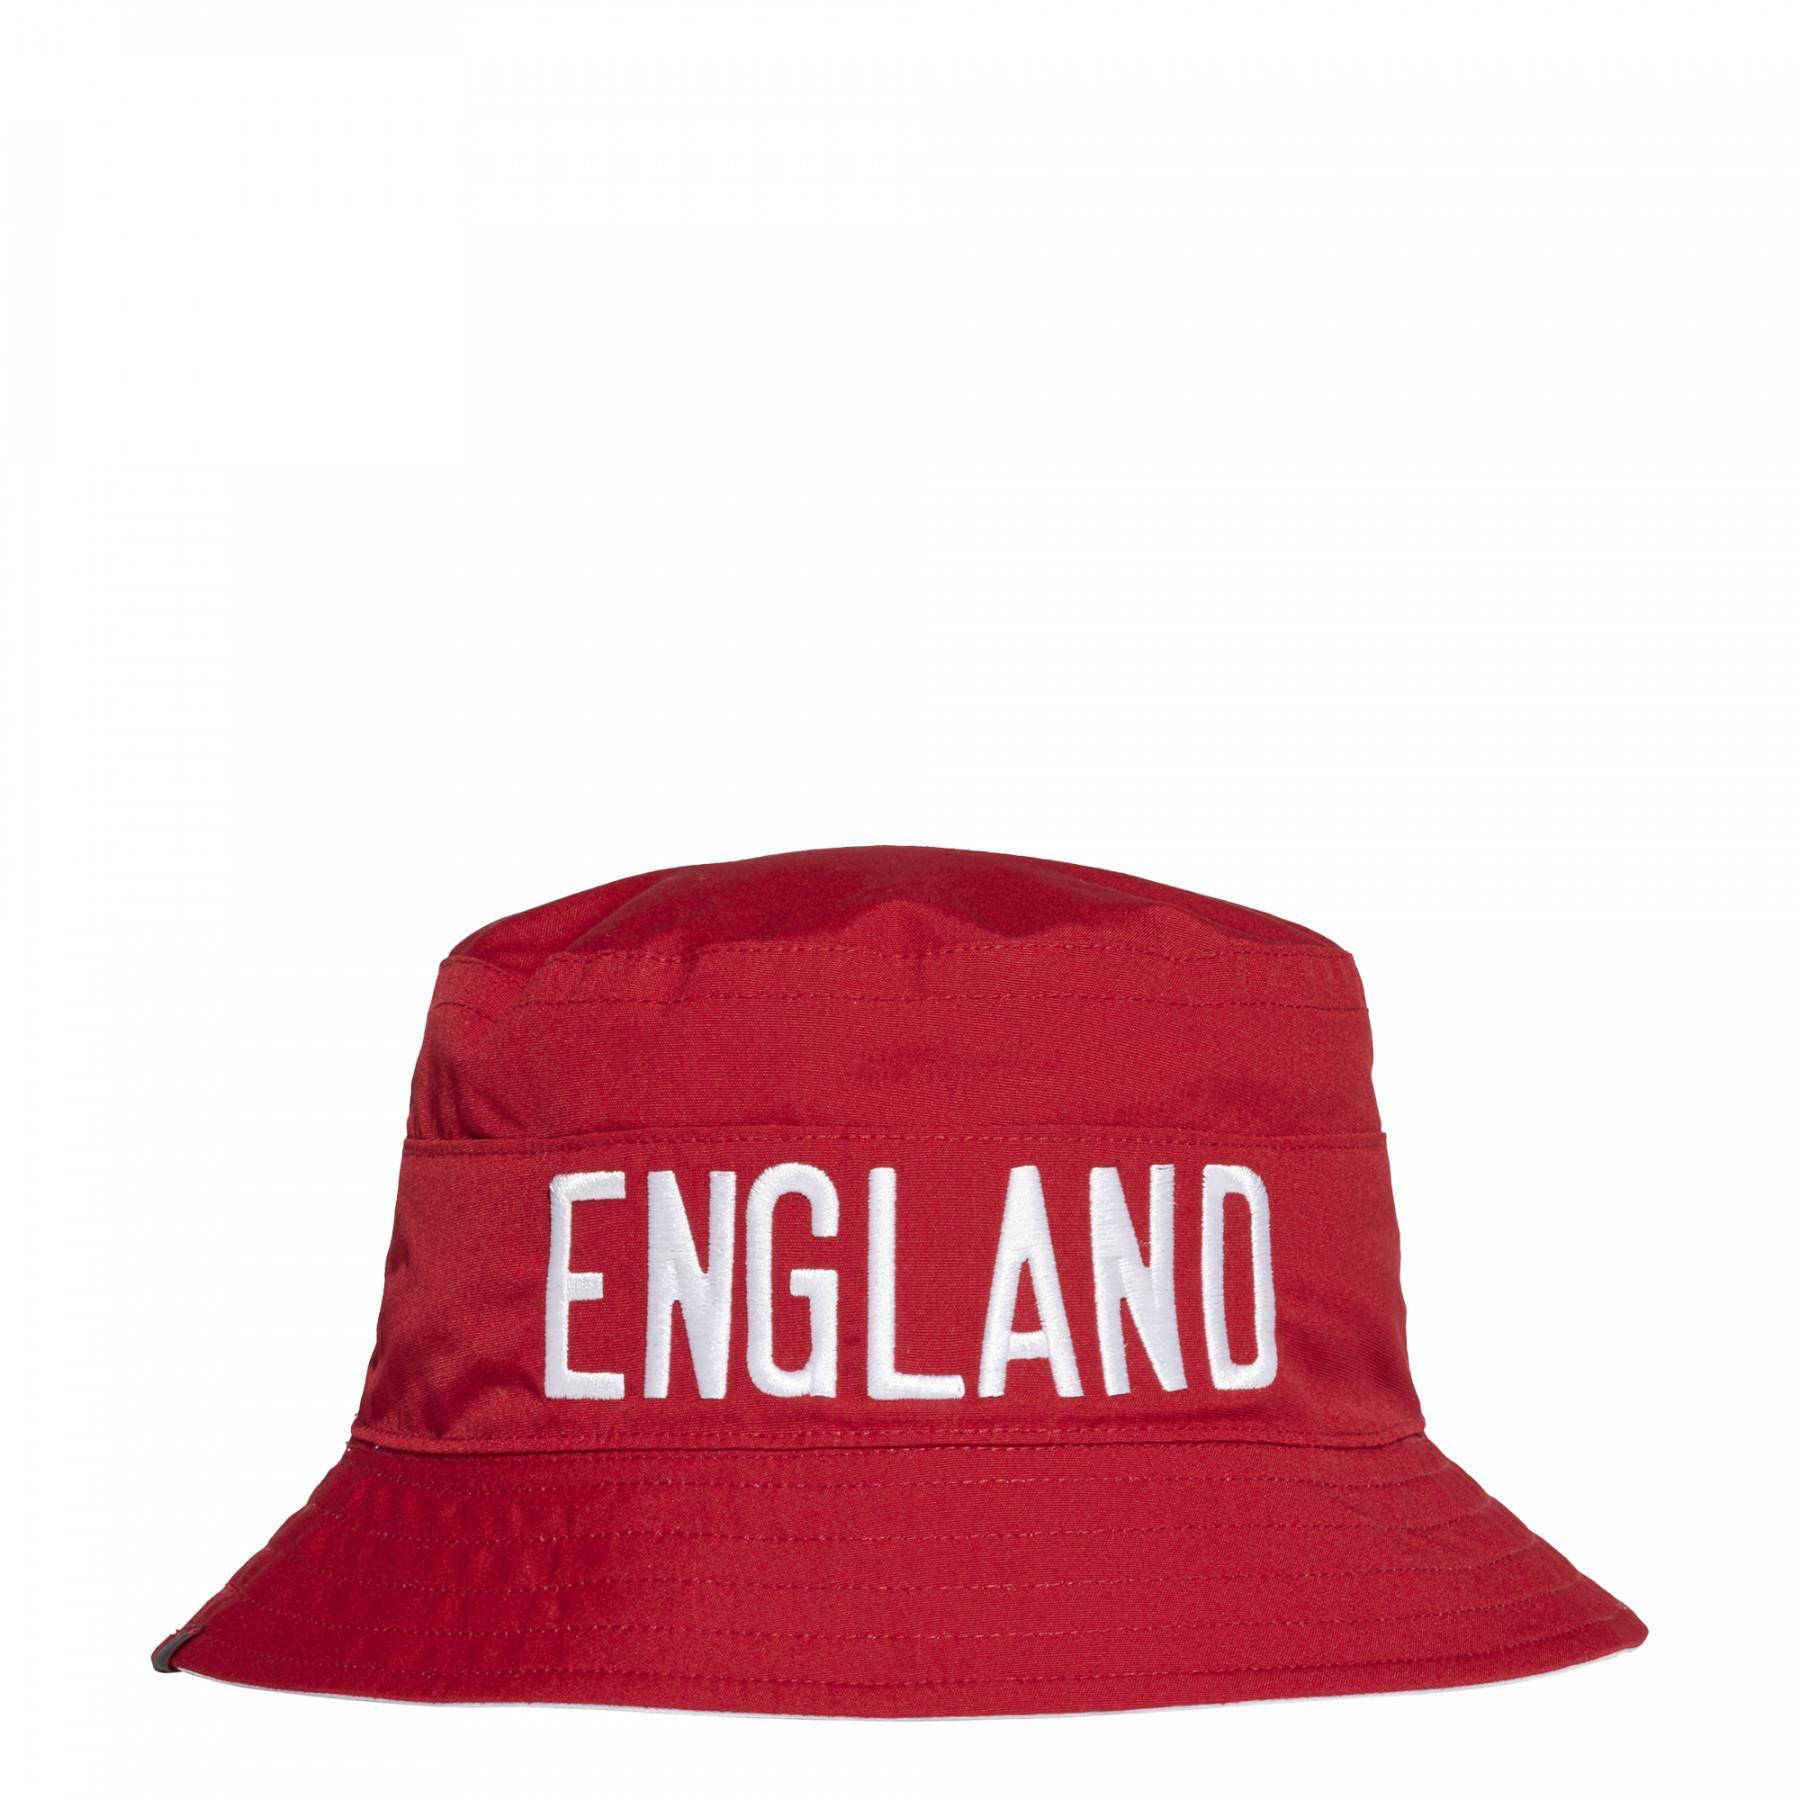 Odwracalna cewka adidas Angleterre Fan Euro 2020